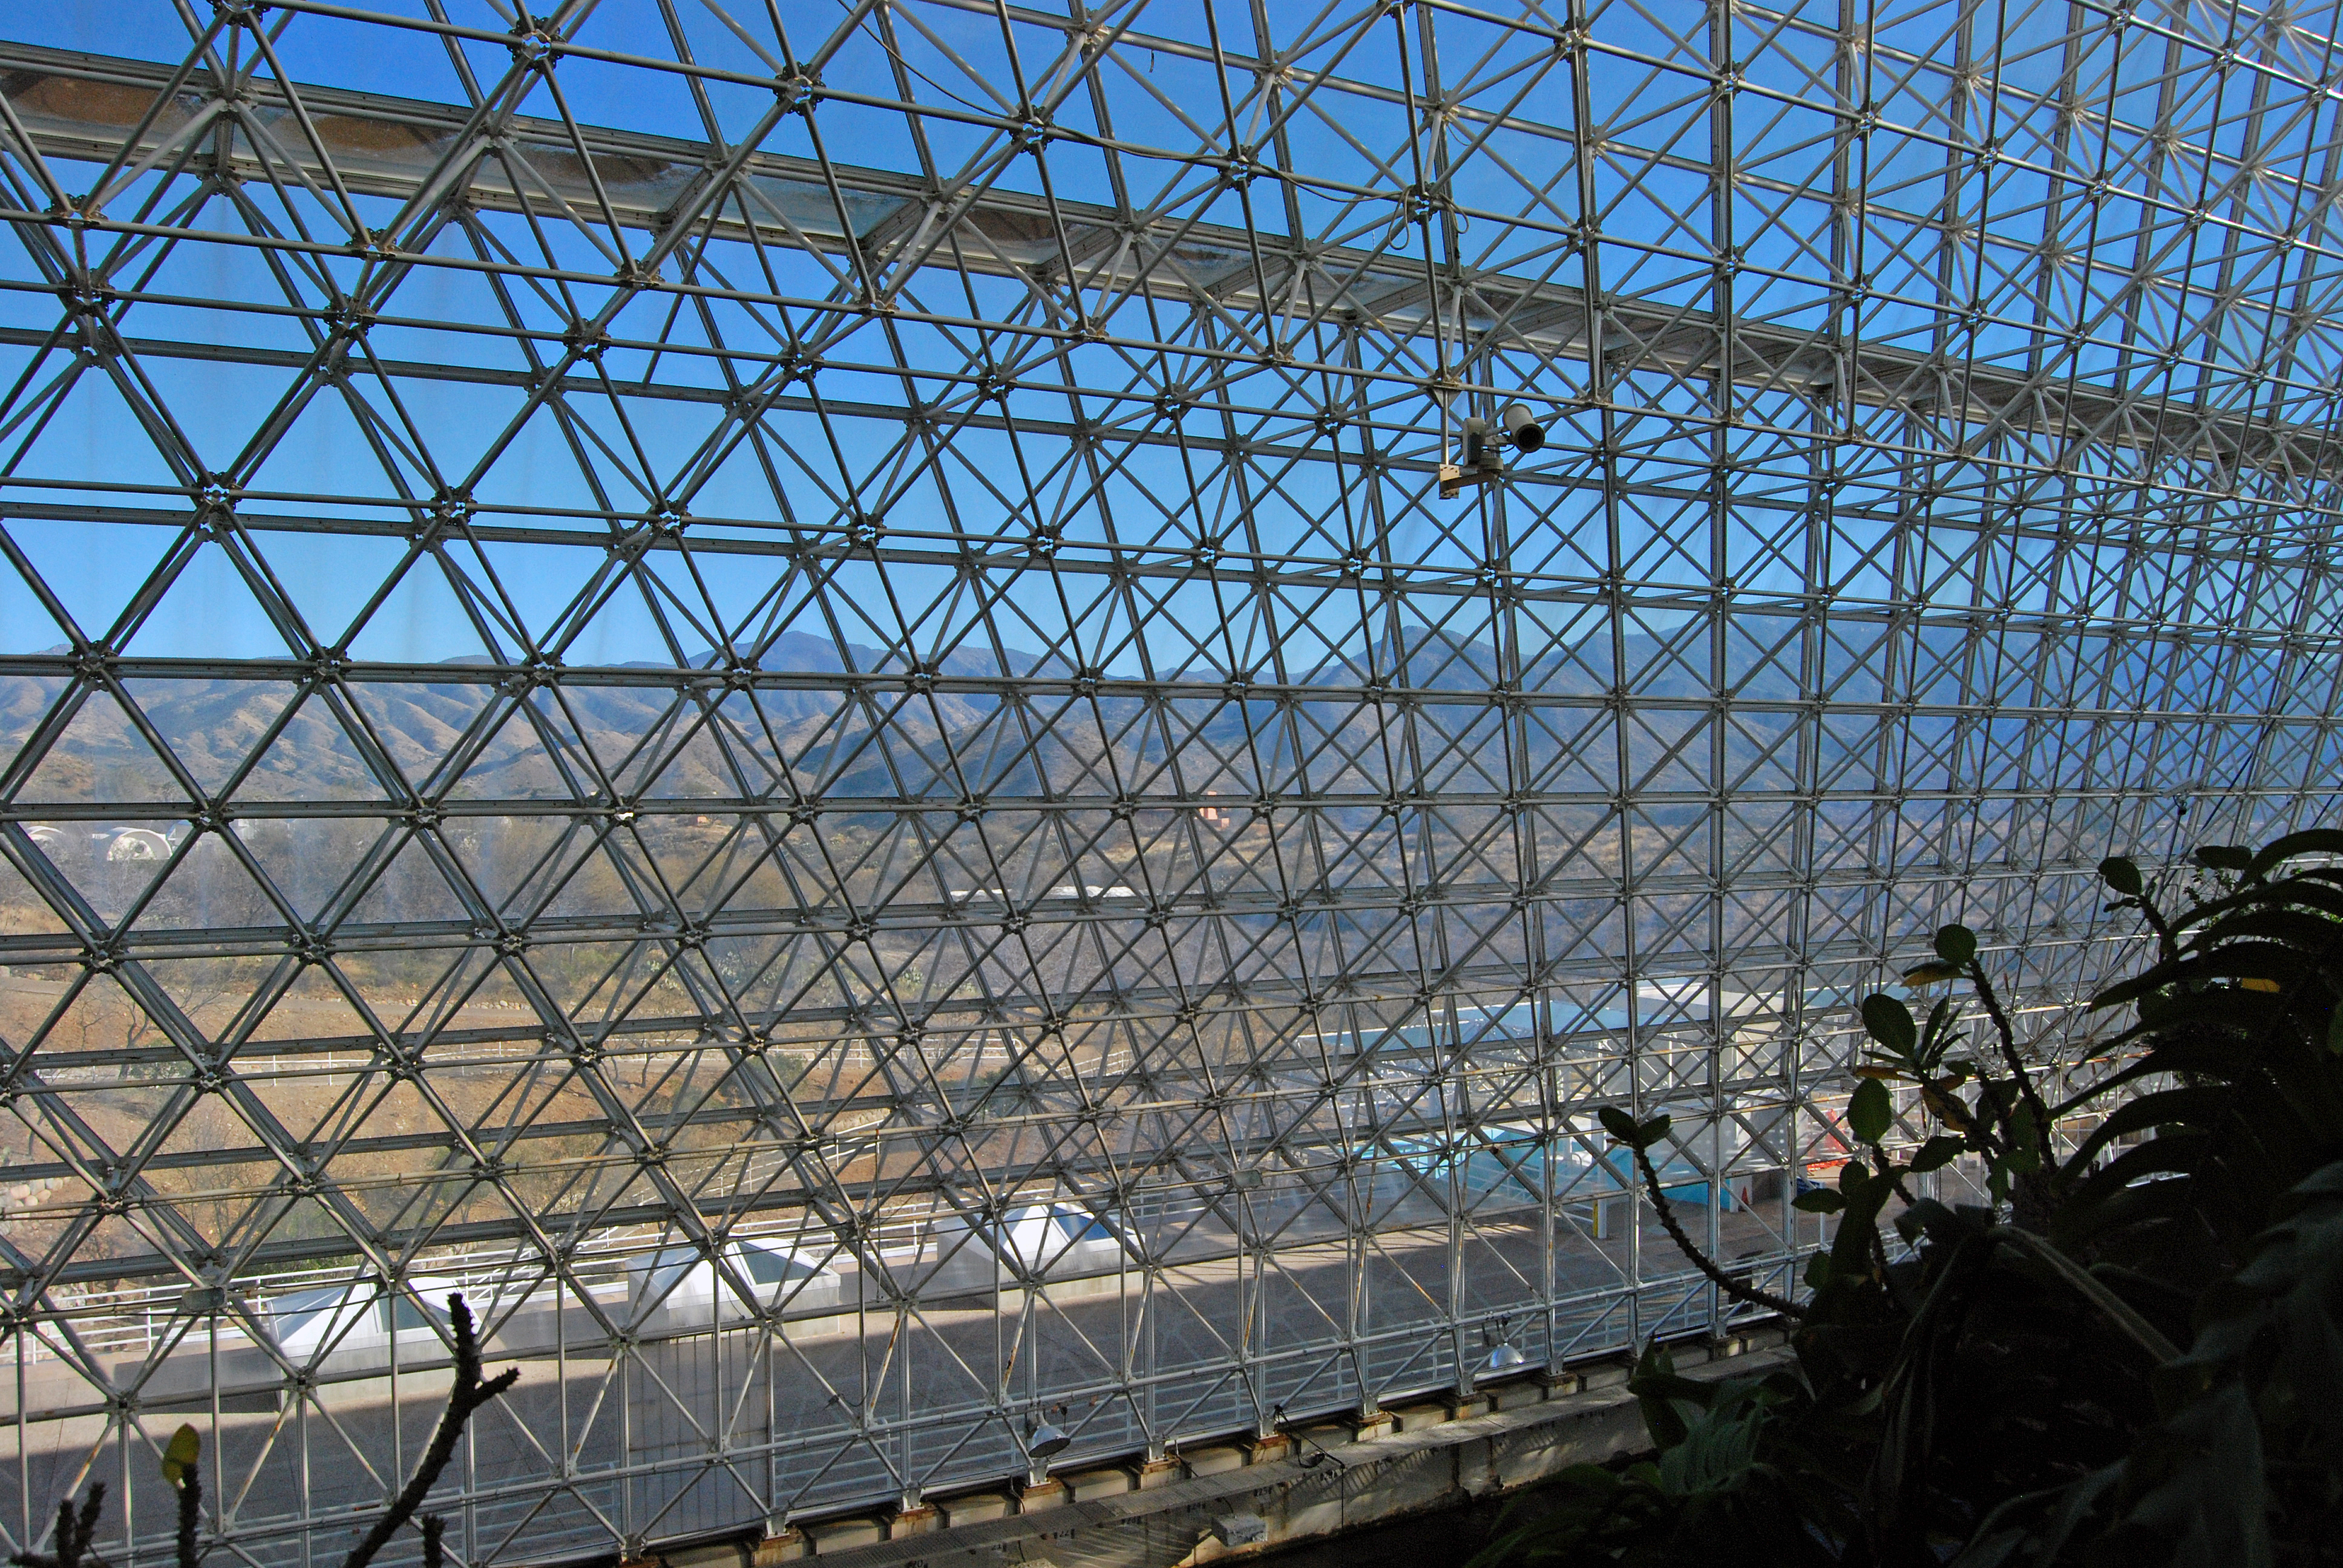 File:Biosphere 2015 01 18 0316.jpg - Wikimedia Commons